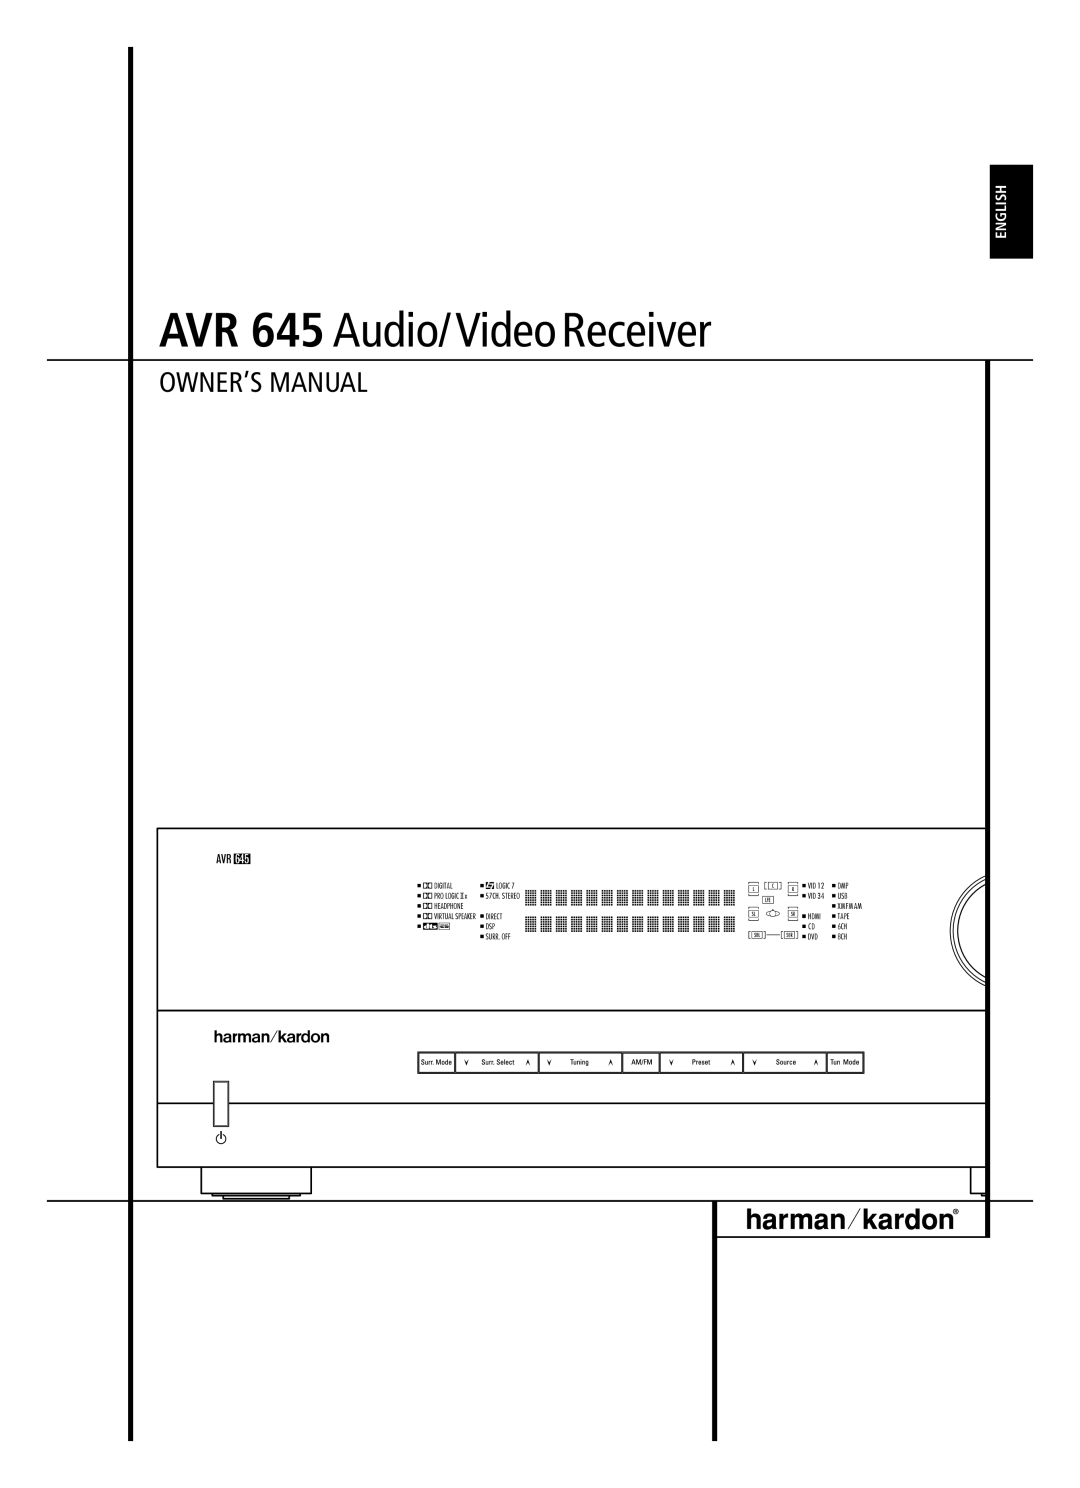 Harman-Kardon owner manual English, AVR 645 Audio/ Video Receiver, Owner’S Manual 